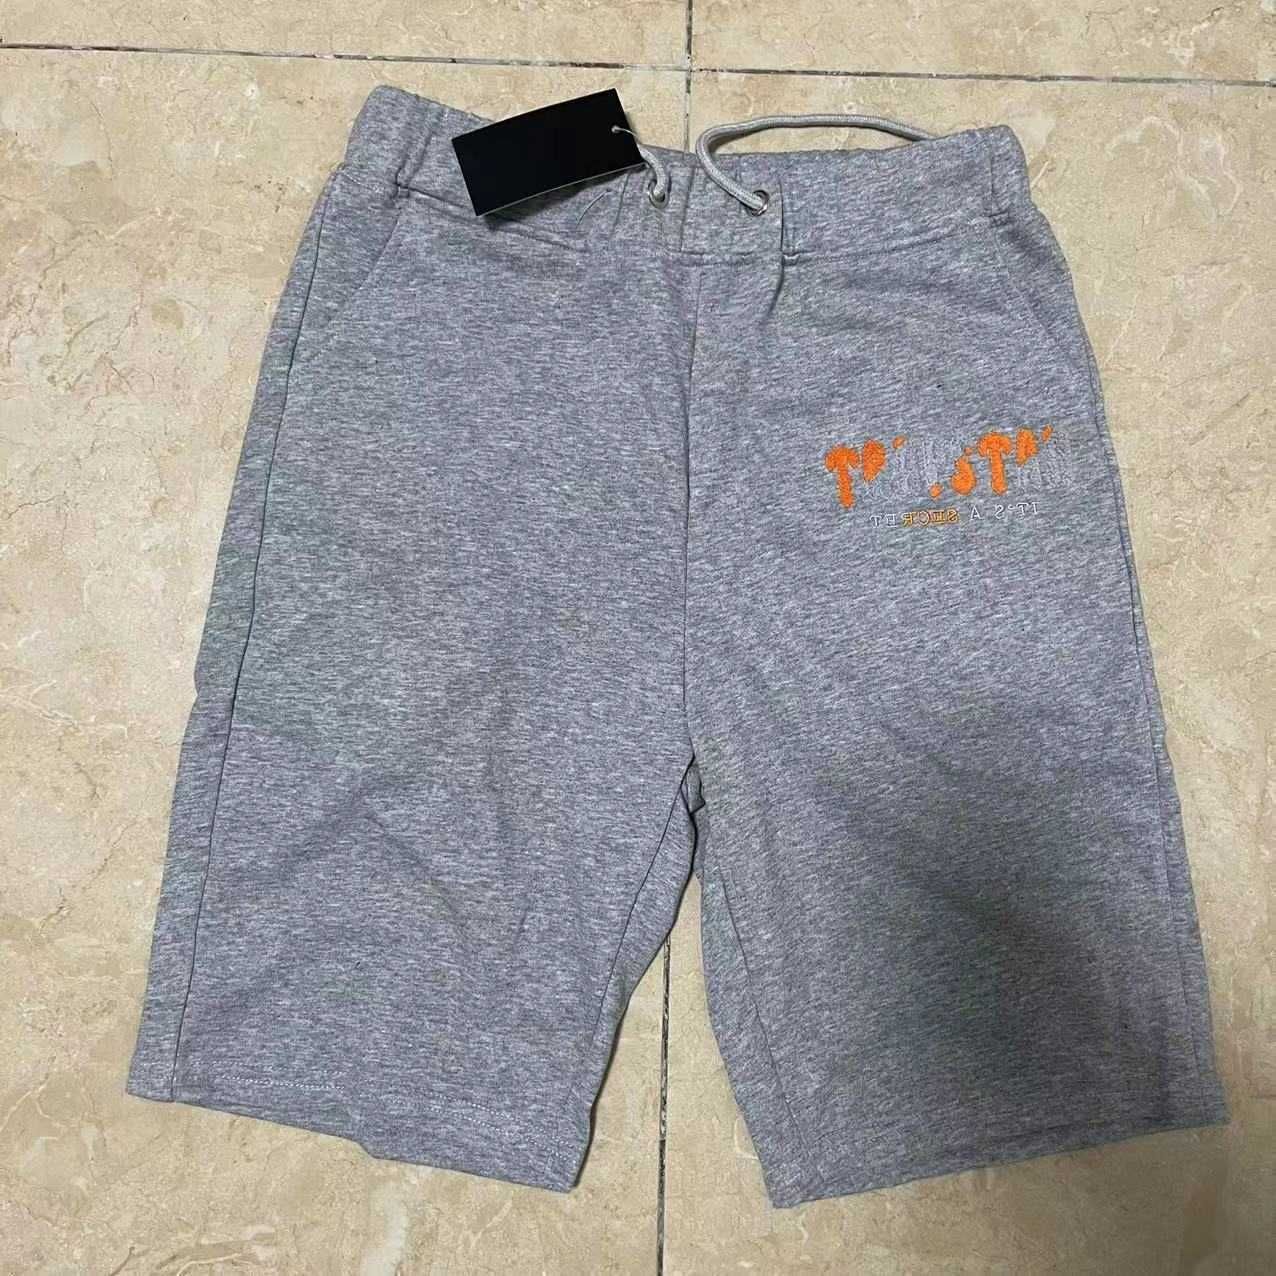 grey orange grey shorts